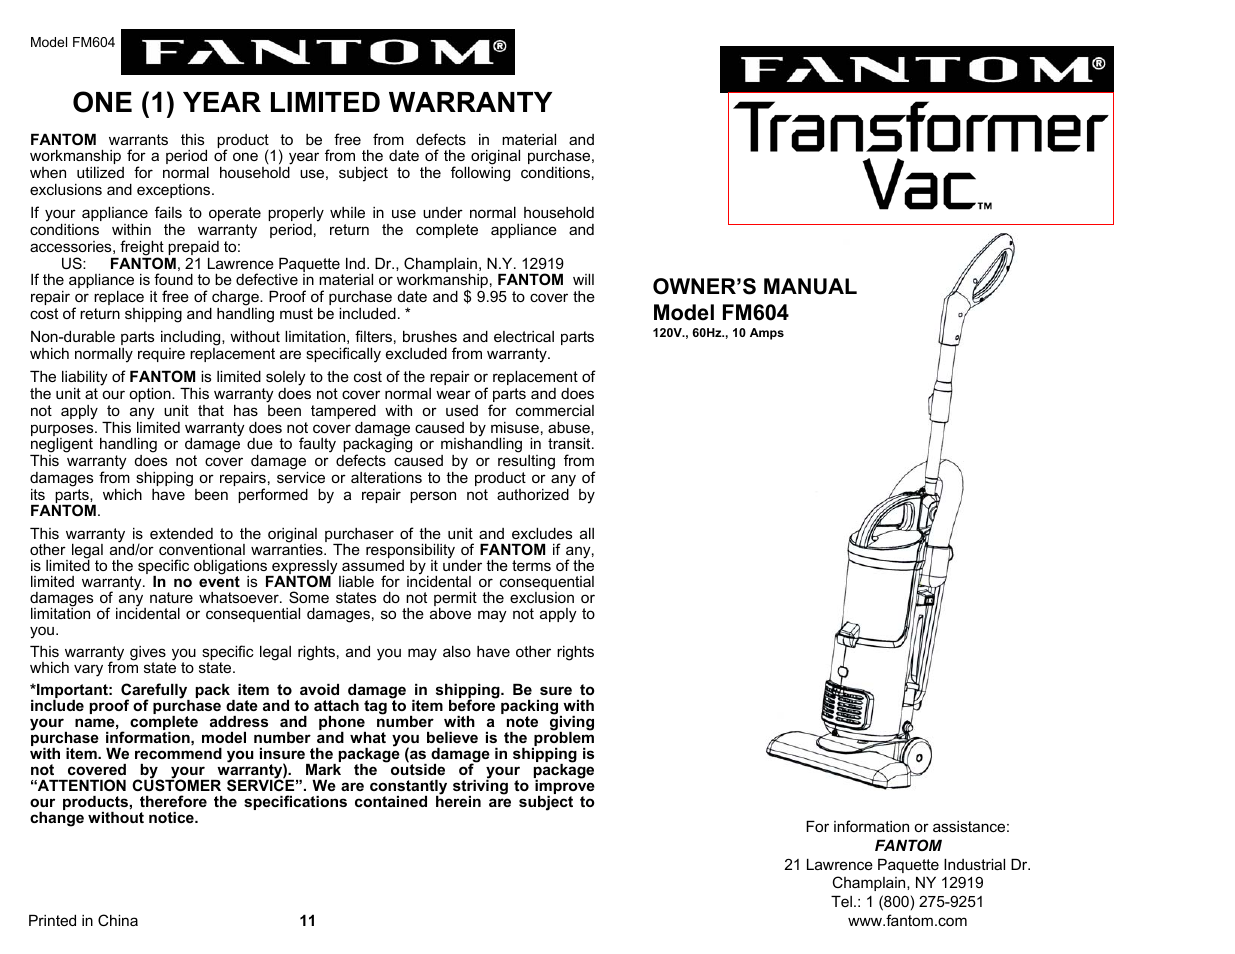 Fantom Vacuum TRANSFORMER VAC FM604 User Manual | 6 pages